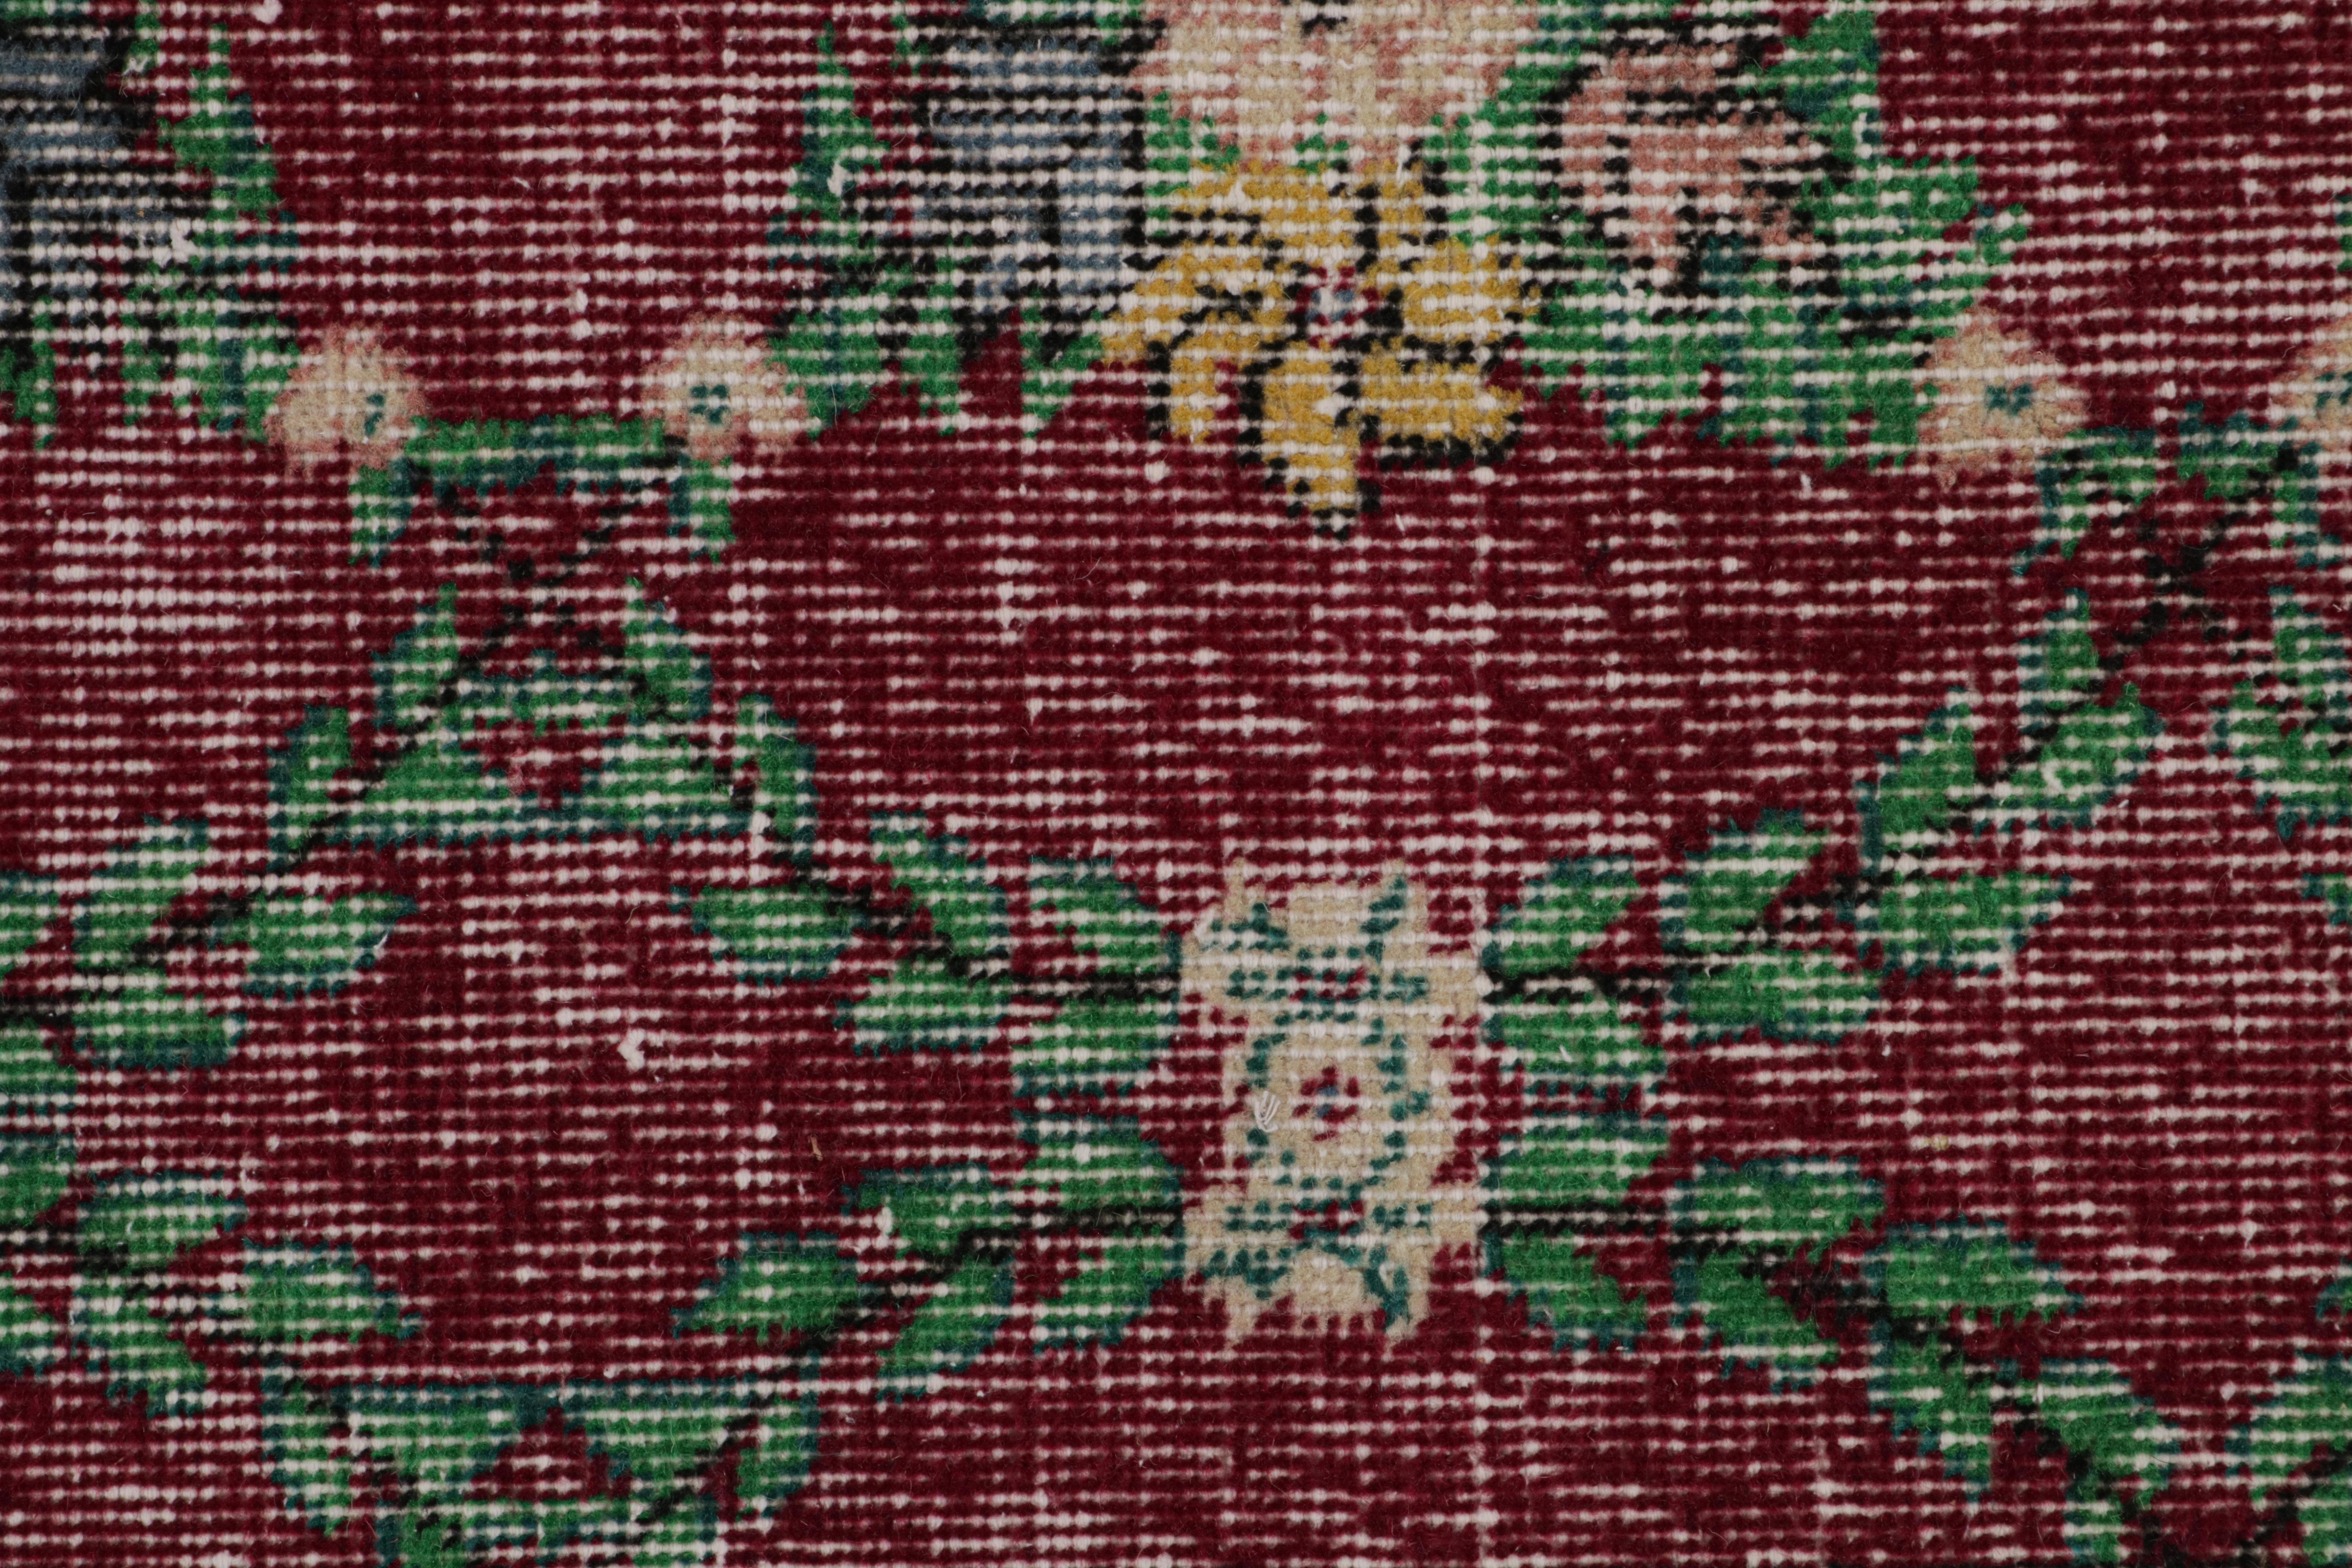 Mid-20th Century Vintage Zeki Müren Rug in Burgundy with Teal Floral Patterns, from Rug & Kilim For Sale